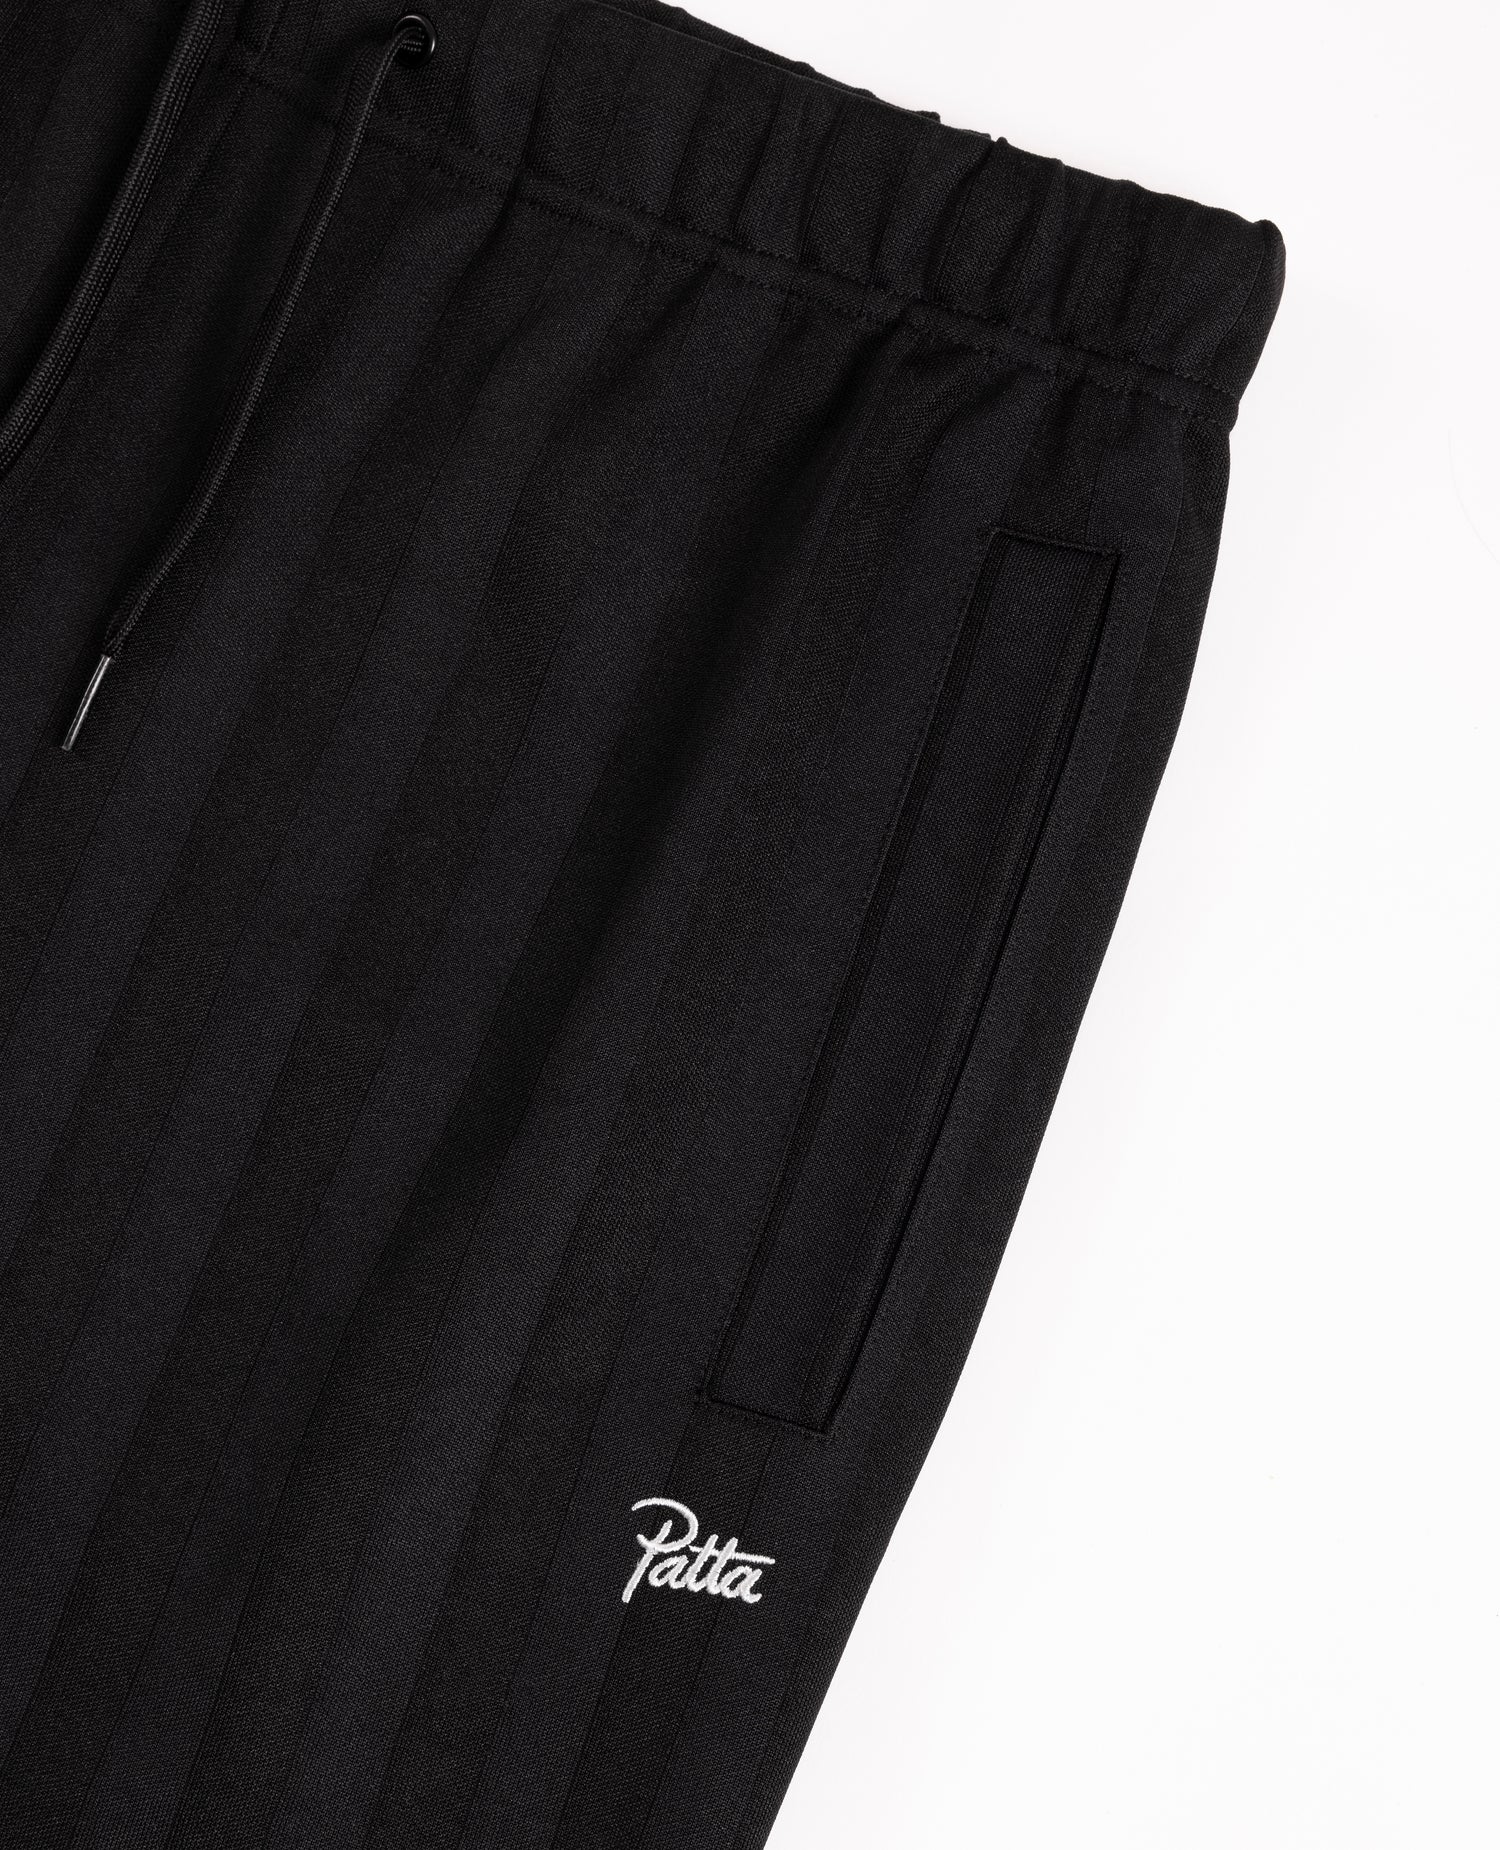 Patta Tricot Track Pants (Black) – Patta UK